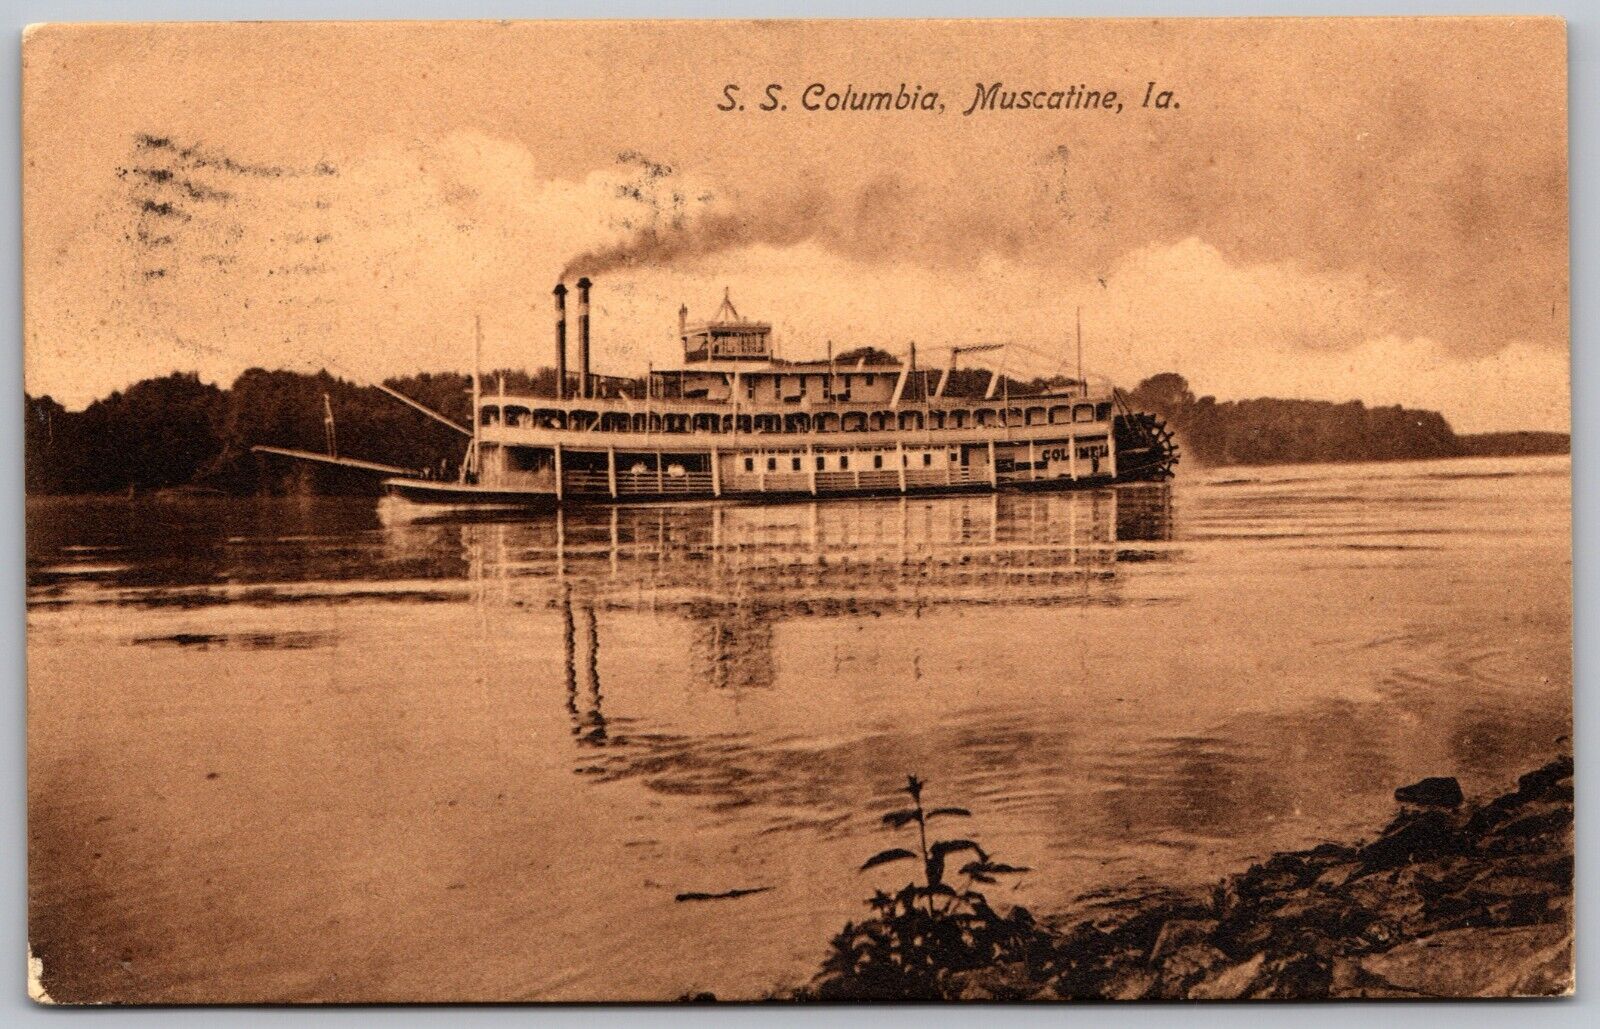 S. S. Columbia, Muscatine, Ia.  (Oscar Grossheim)  ca 1908  Postcard  17